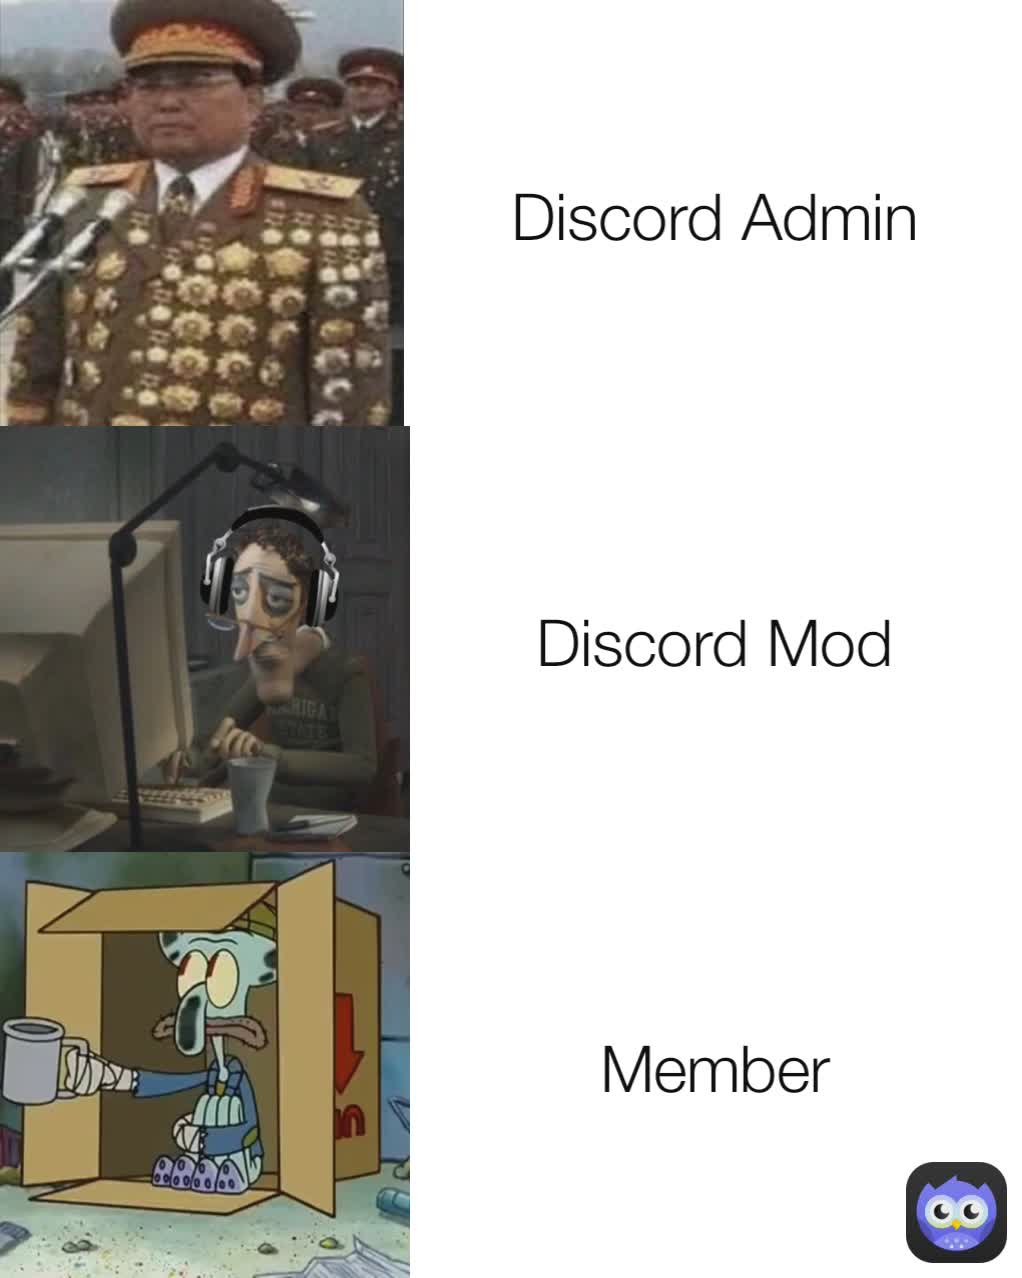 Member Discord Mod Discord Admin